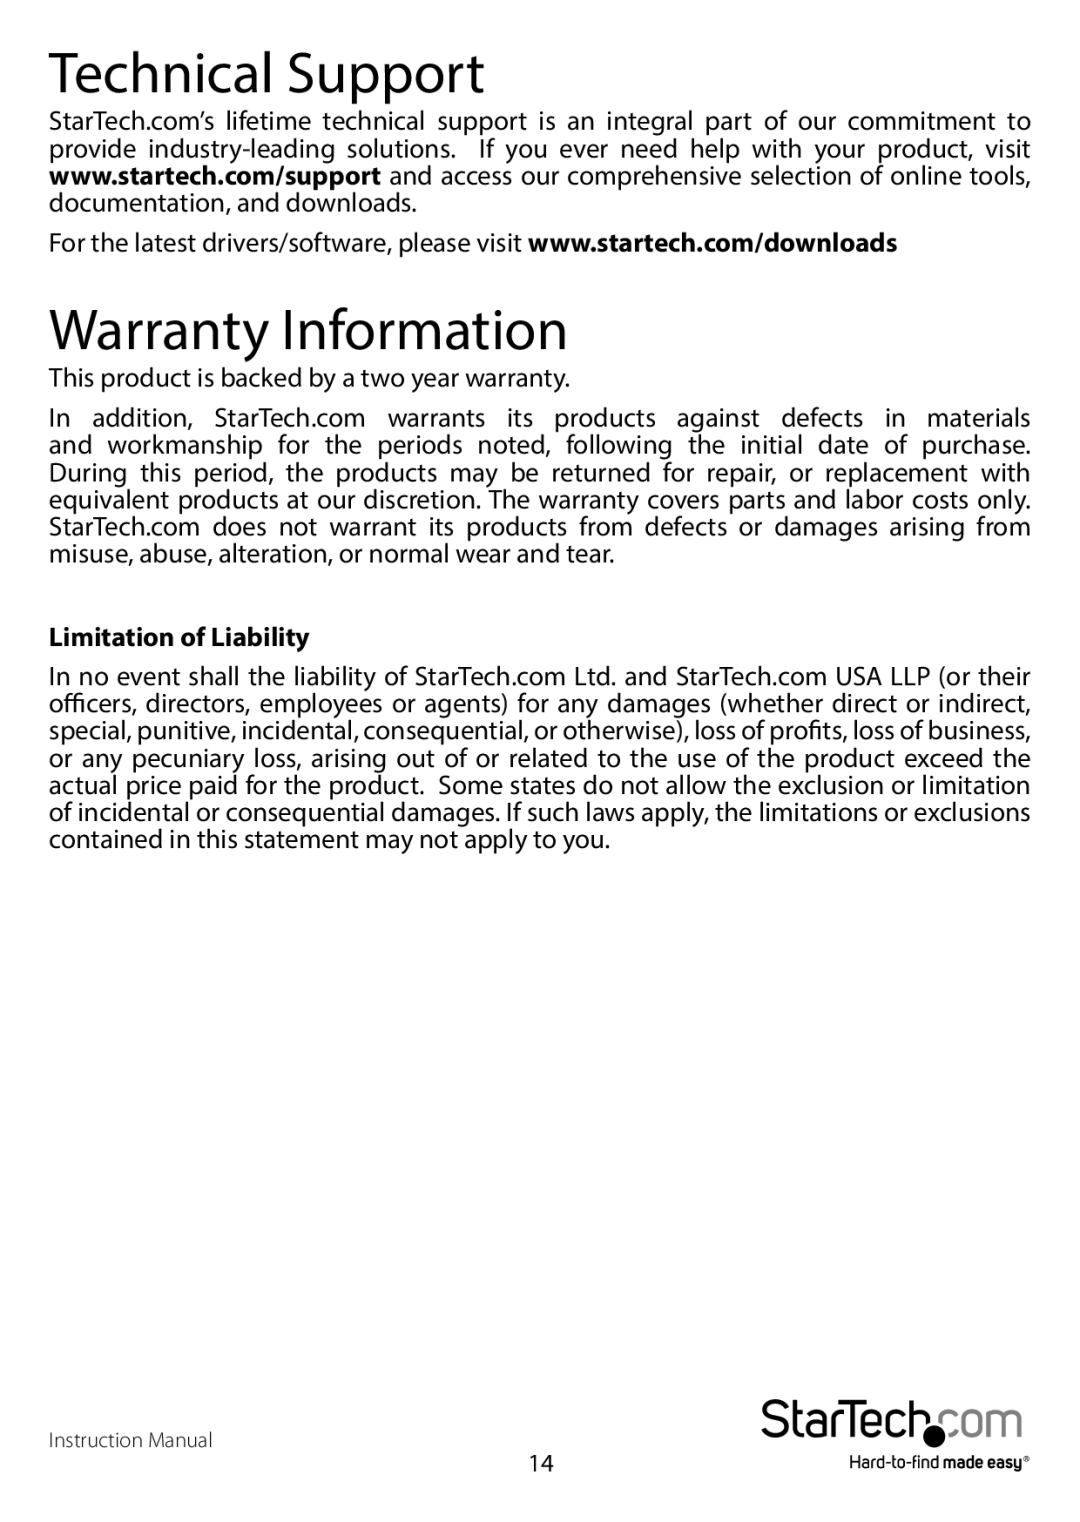 StarTech.com dvi over cat5e/6 kvm extender manual Technical Support, Warranty Information, Limitation of Liability 